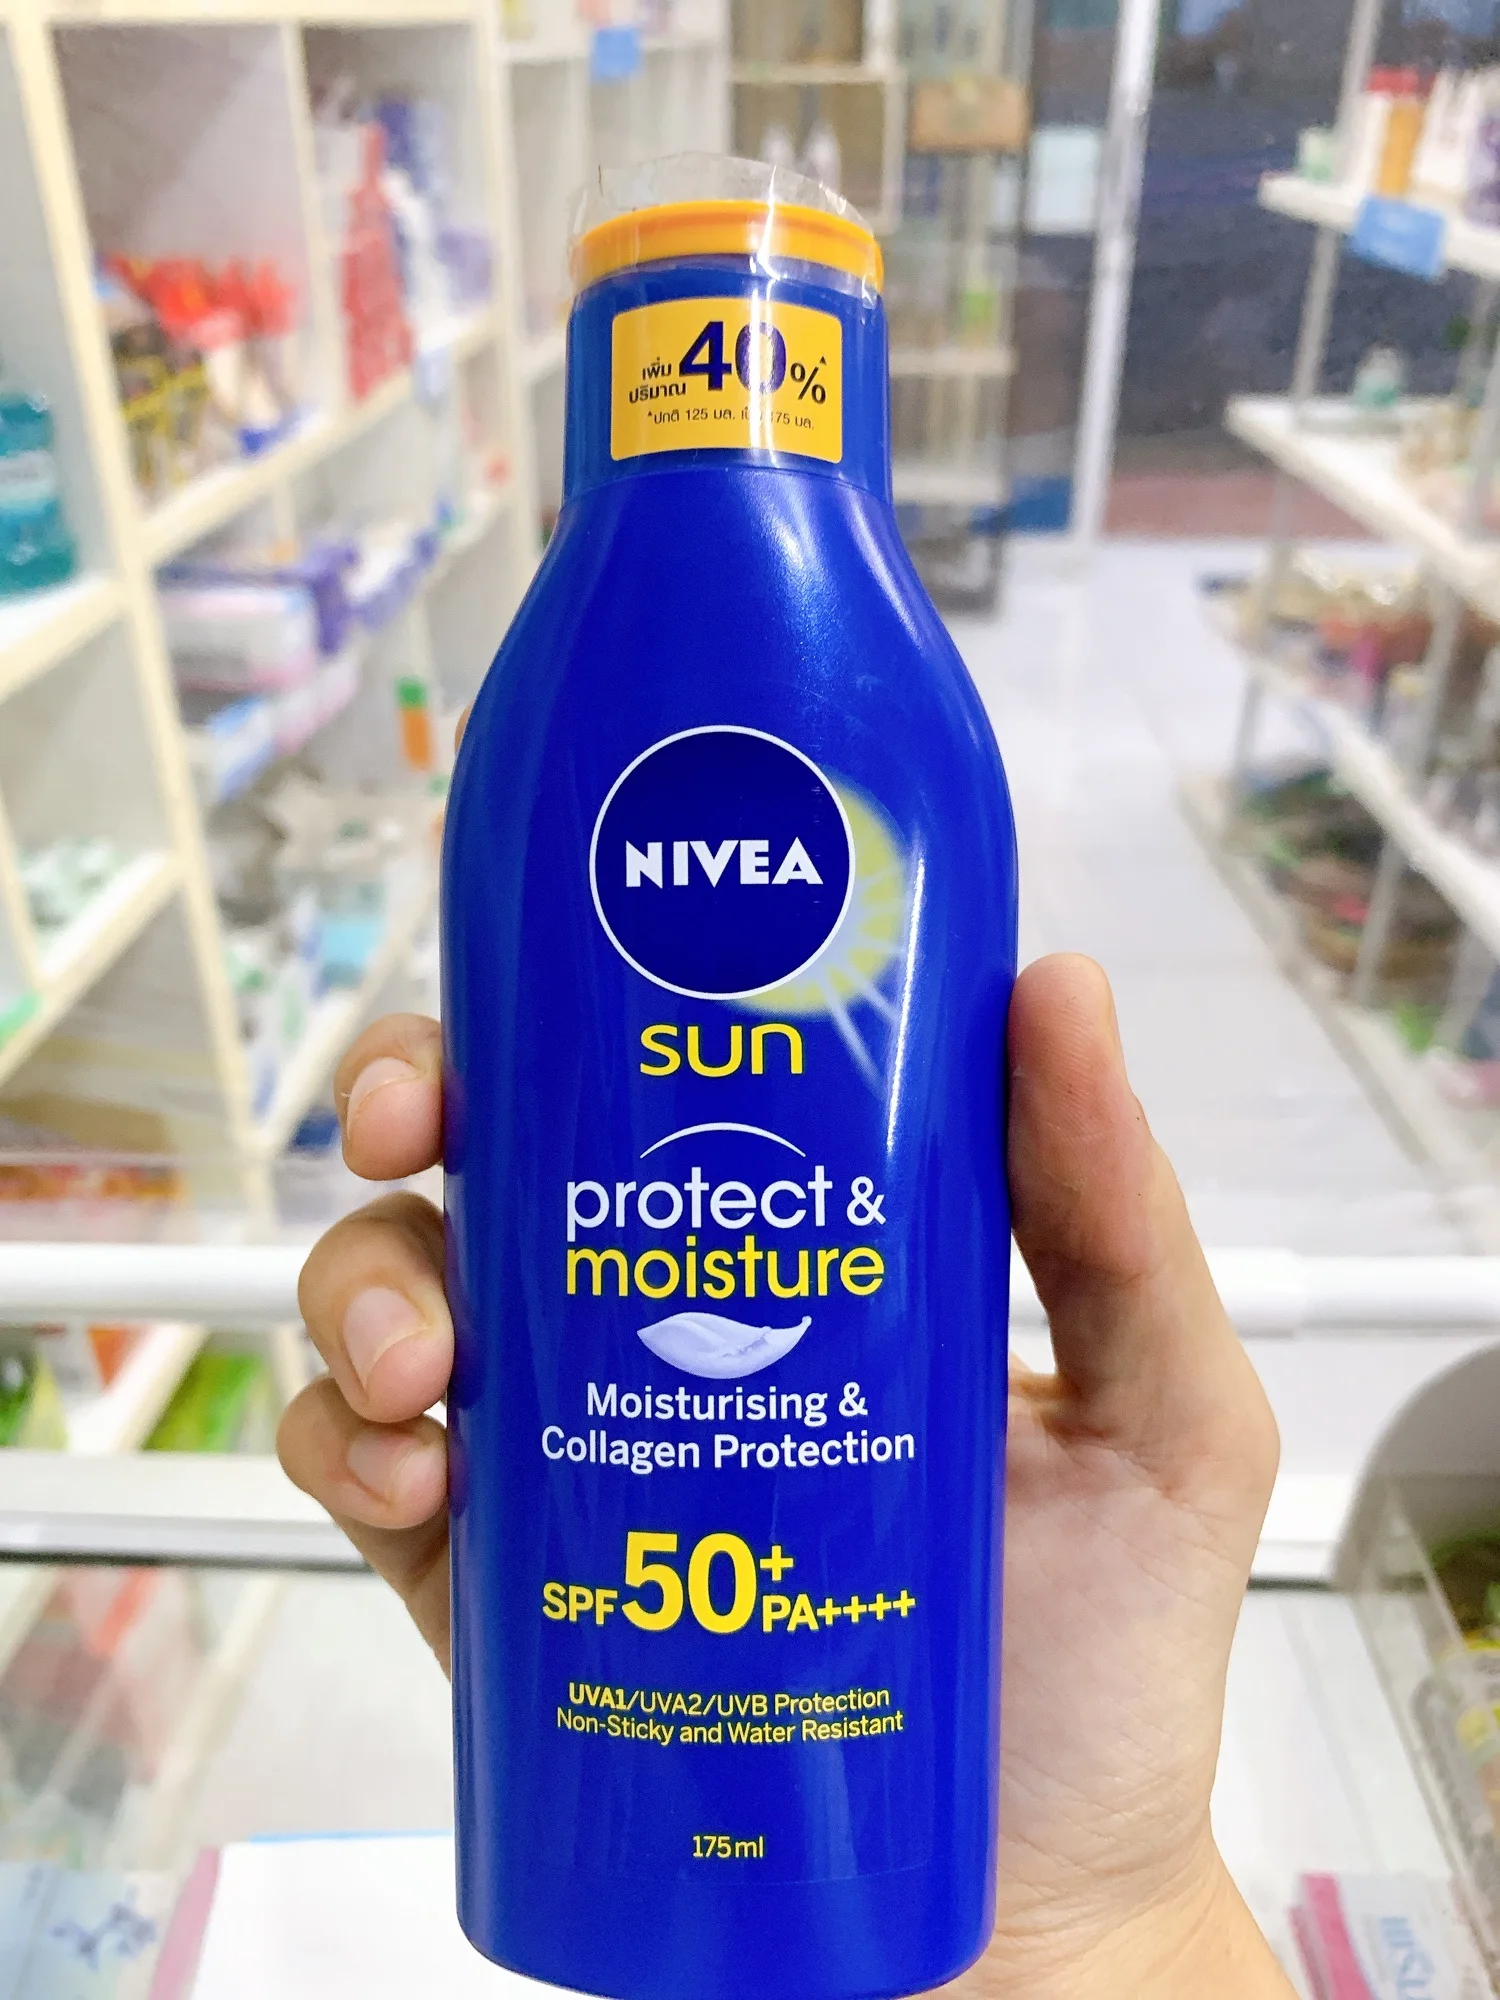 Nivea Sun protect moisture,Collagen Protection Spf50,175ml,exp02/12/22